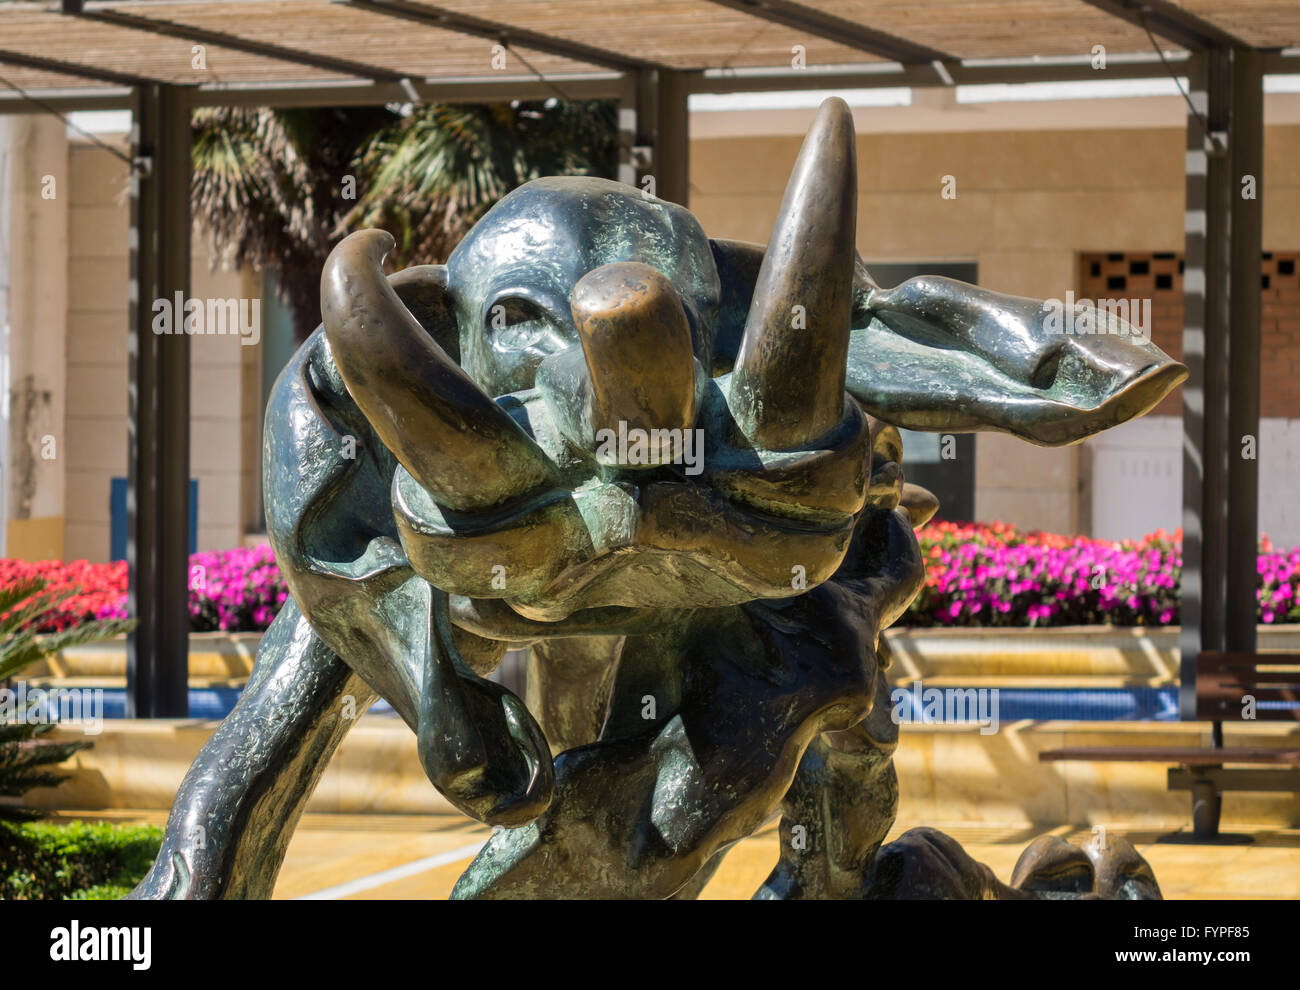 Escultura de elefante de Dali en Marbella Foto de stock